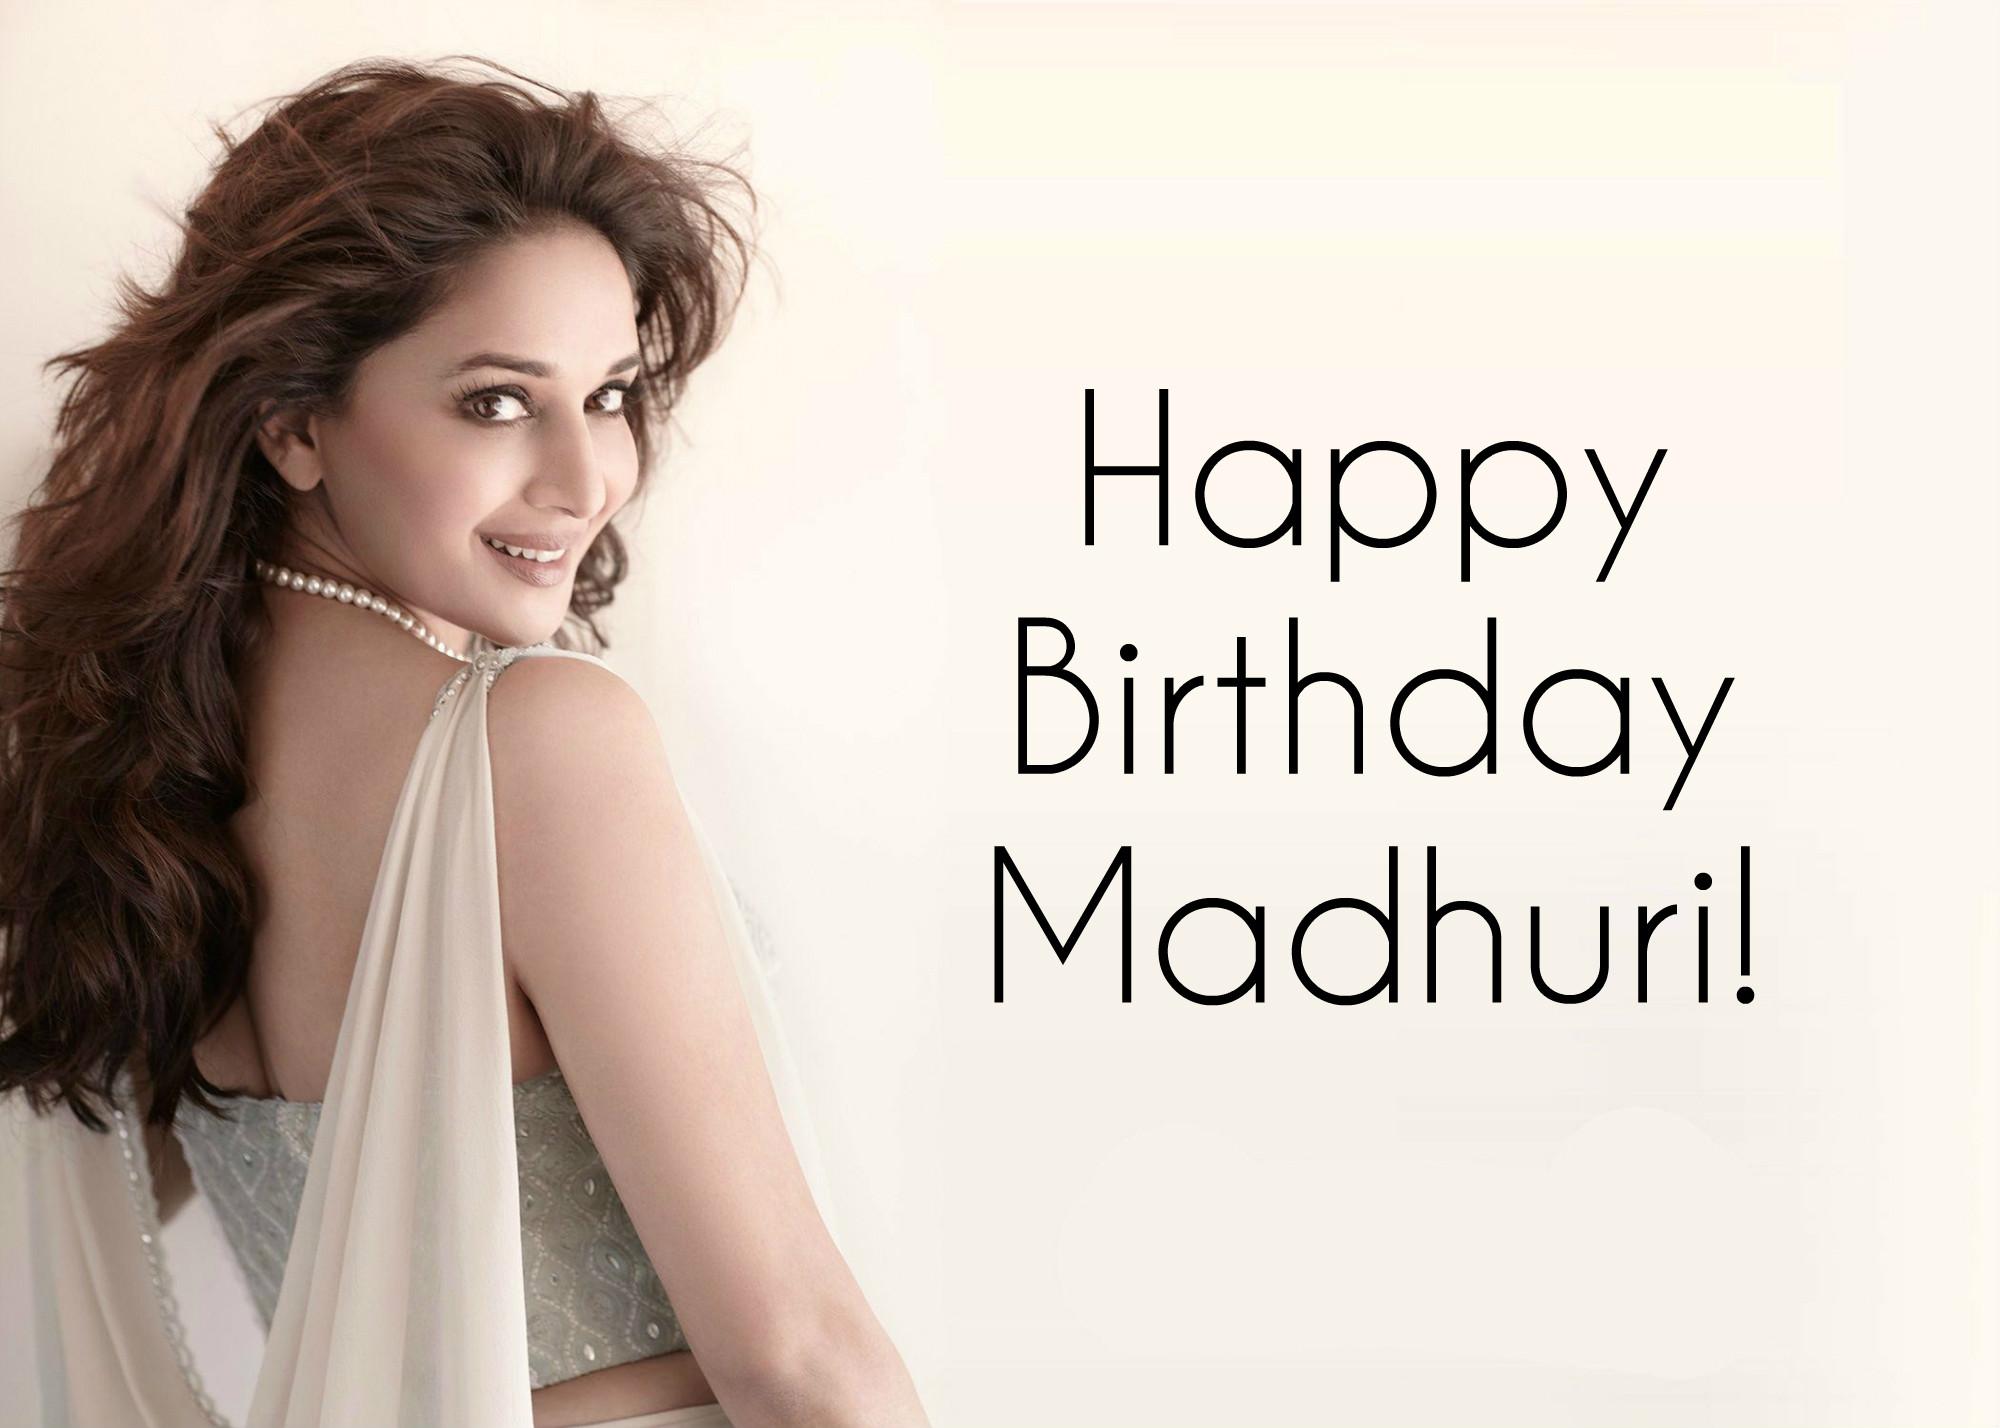 Happy Birthday Madhuri Dixit! 